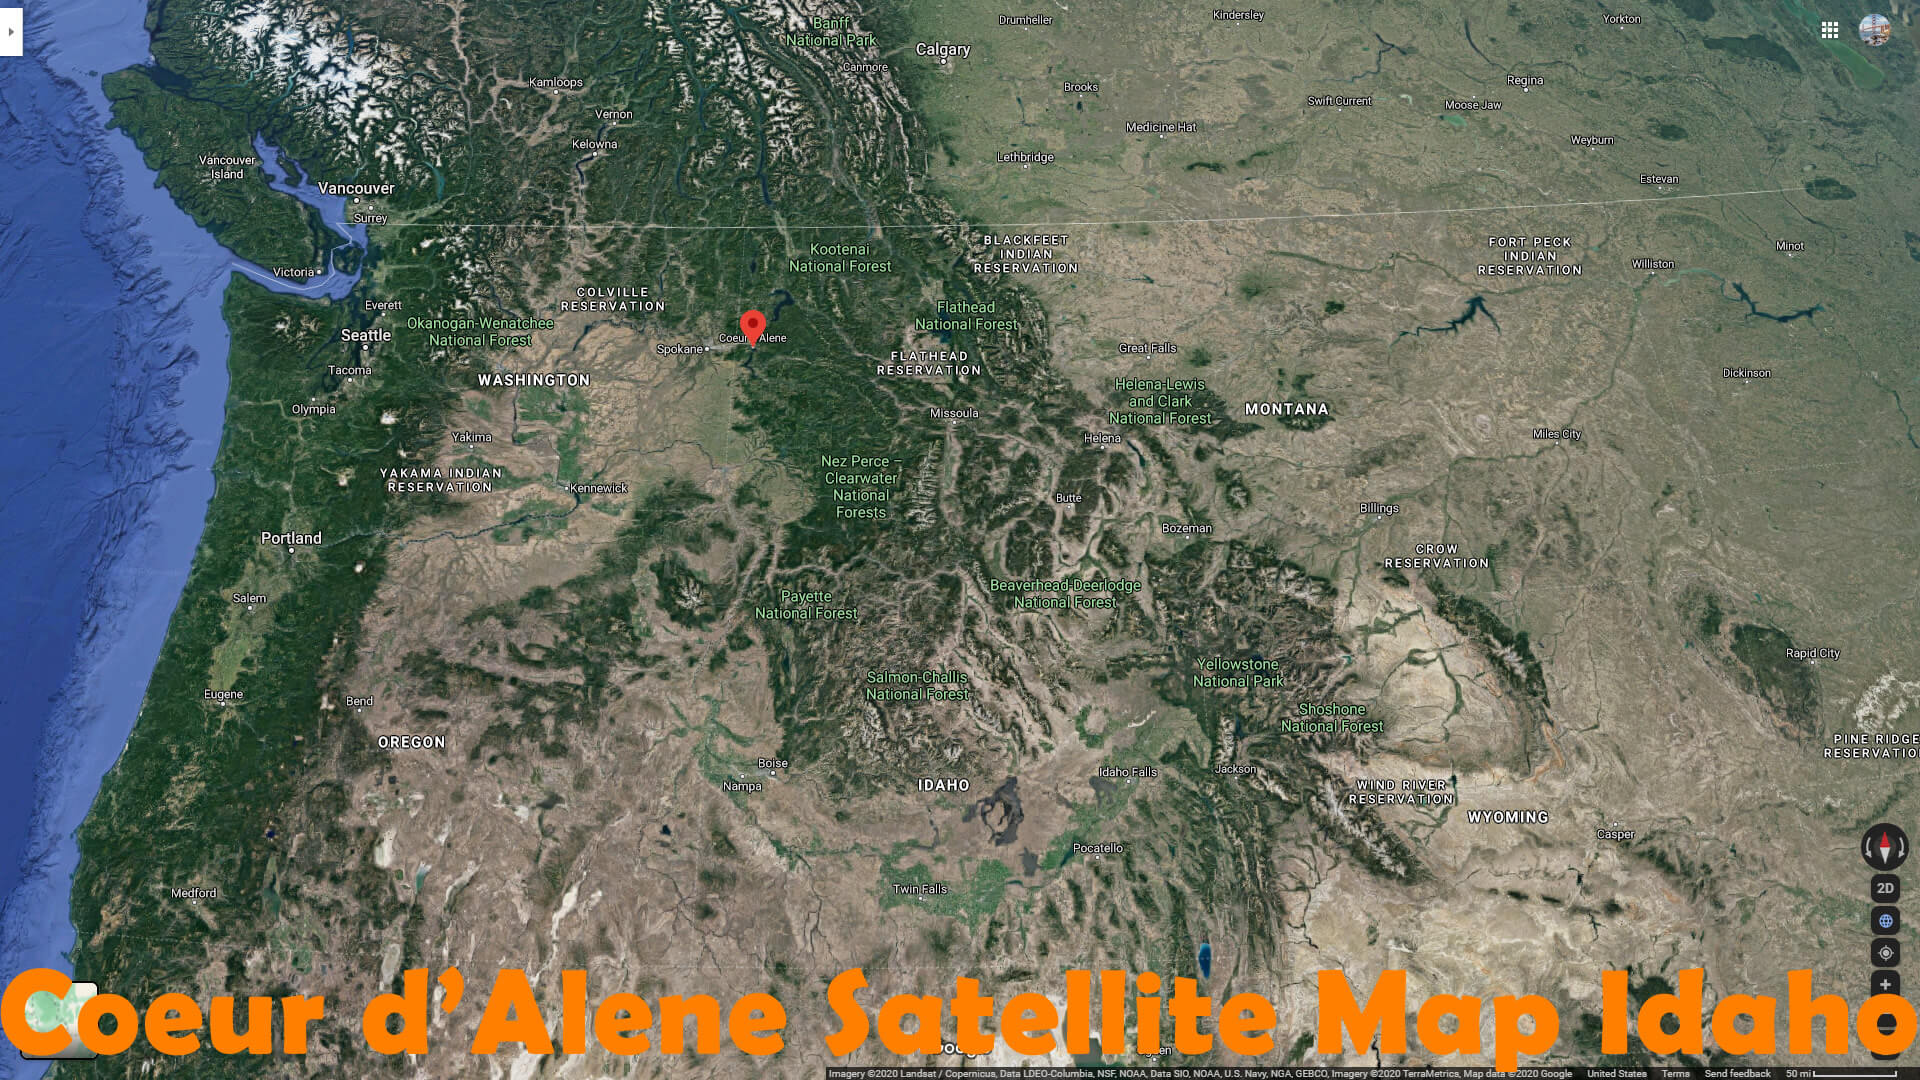 Coeur d'Alene Satellite Map Idaho